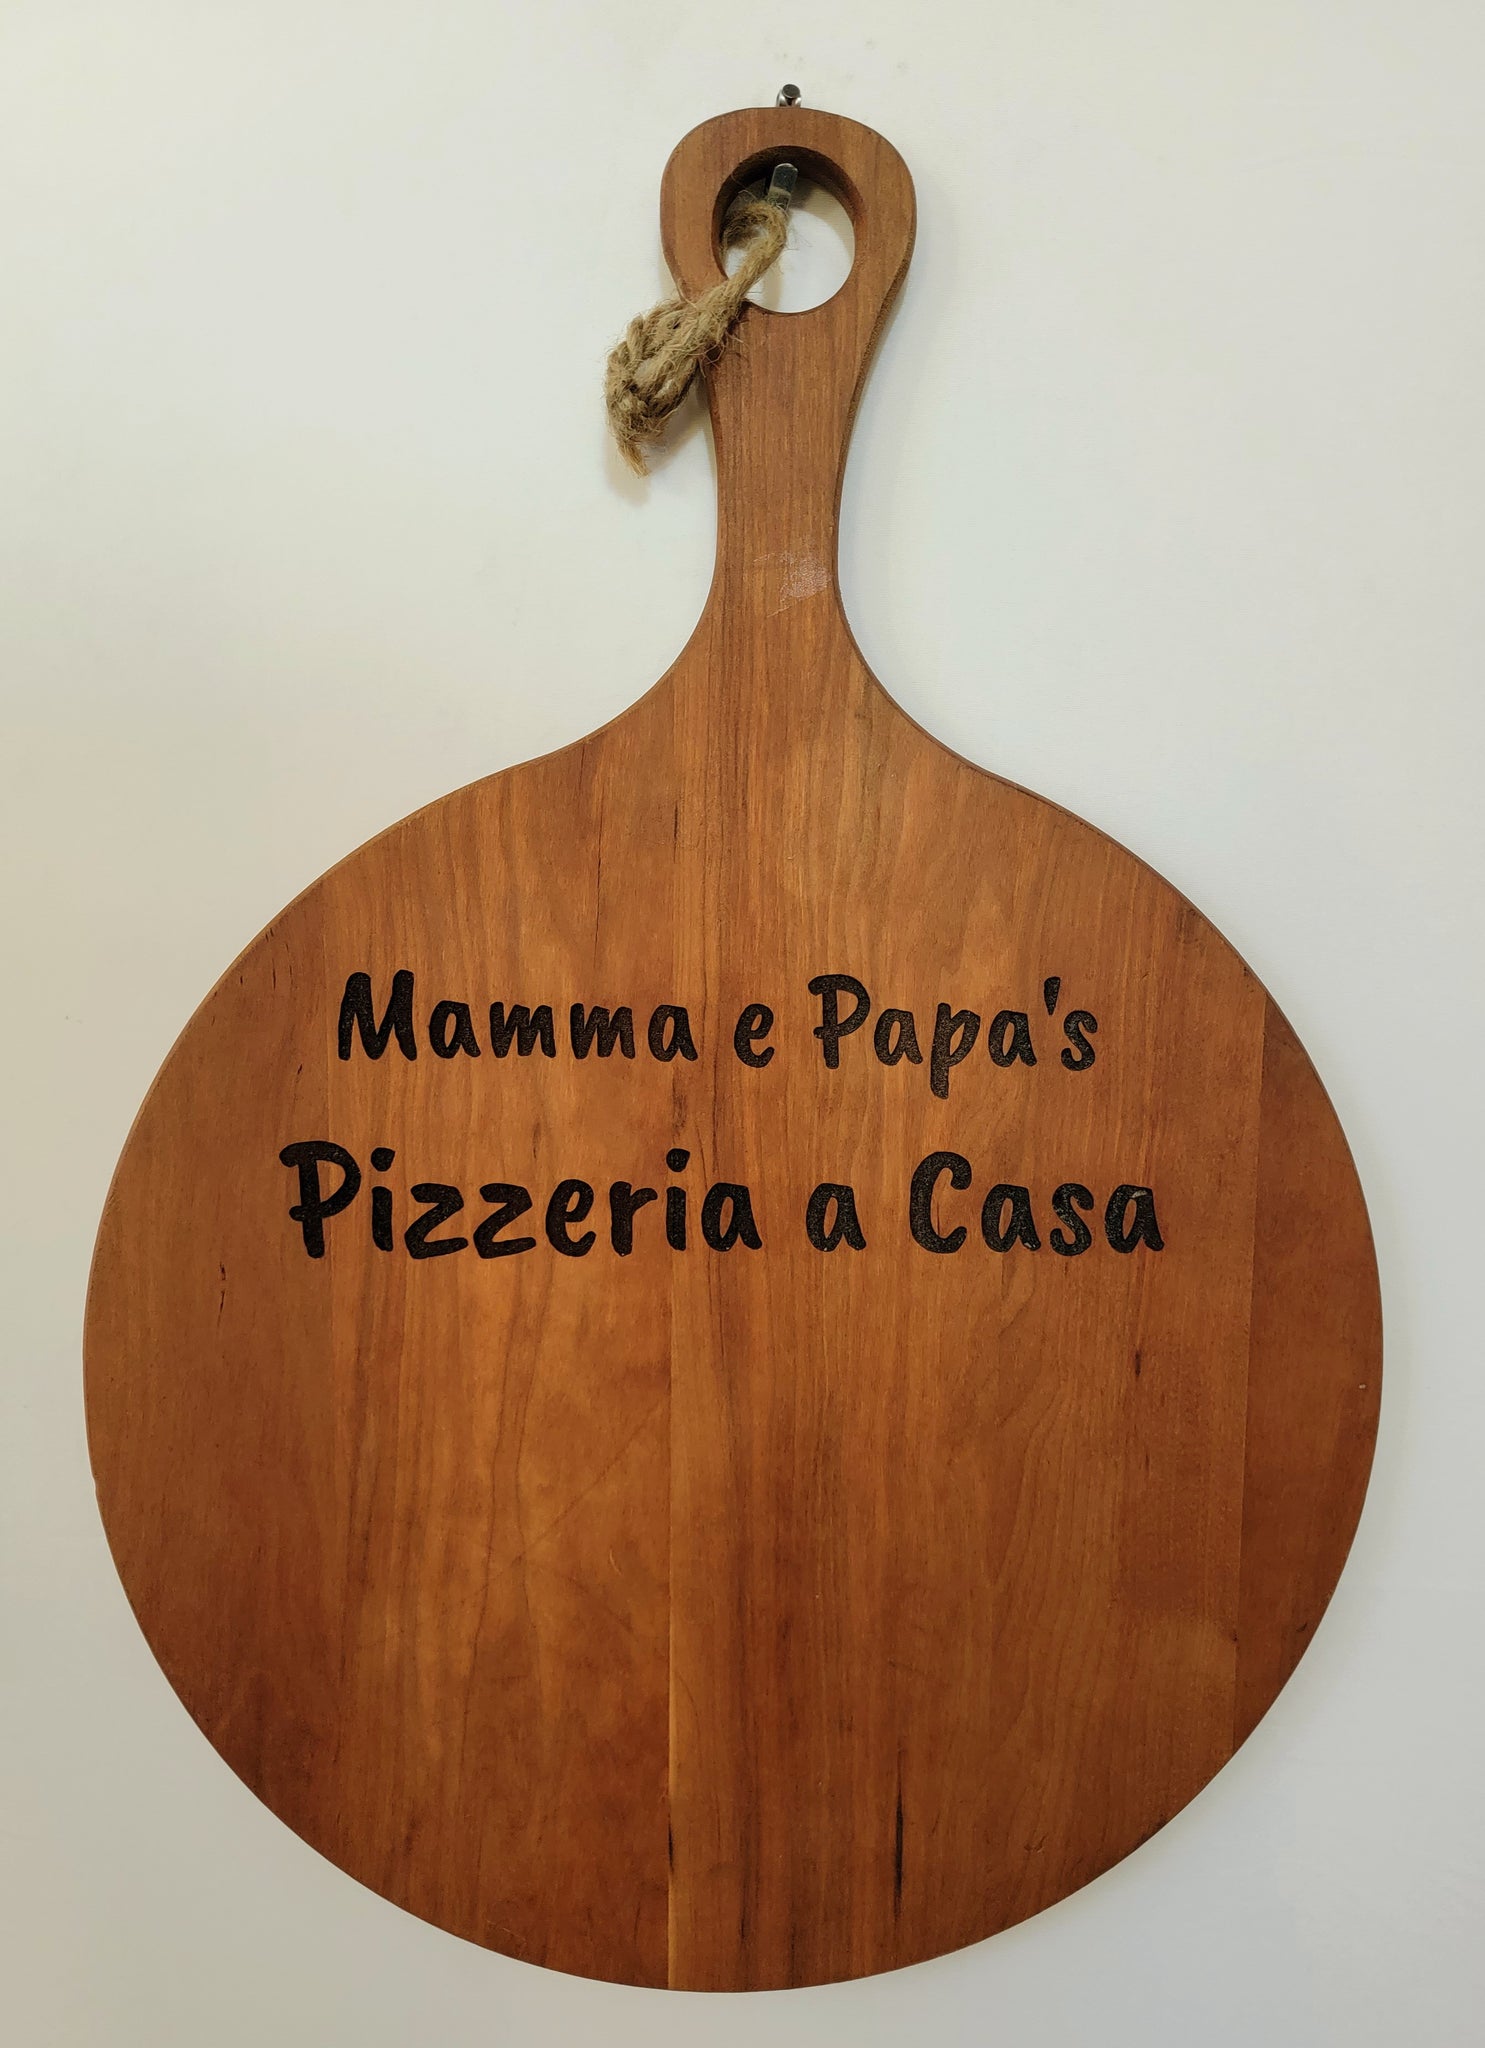 Mamma & Papa's Pizzeria a Casa